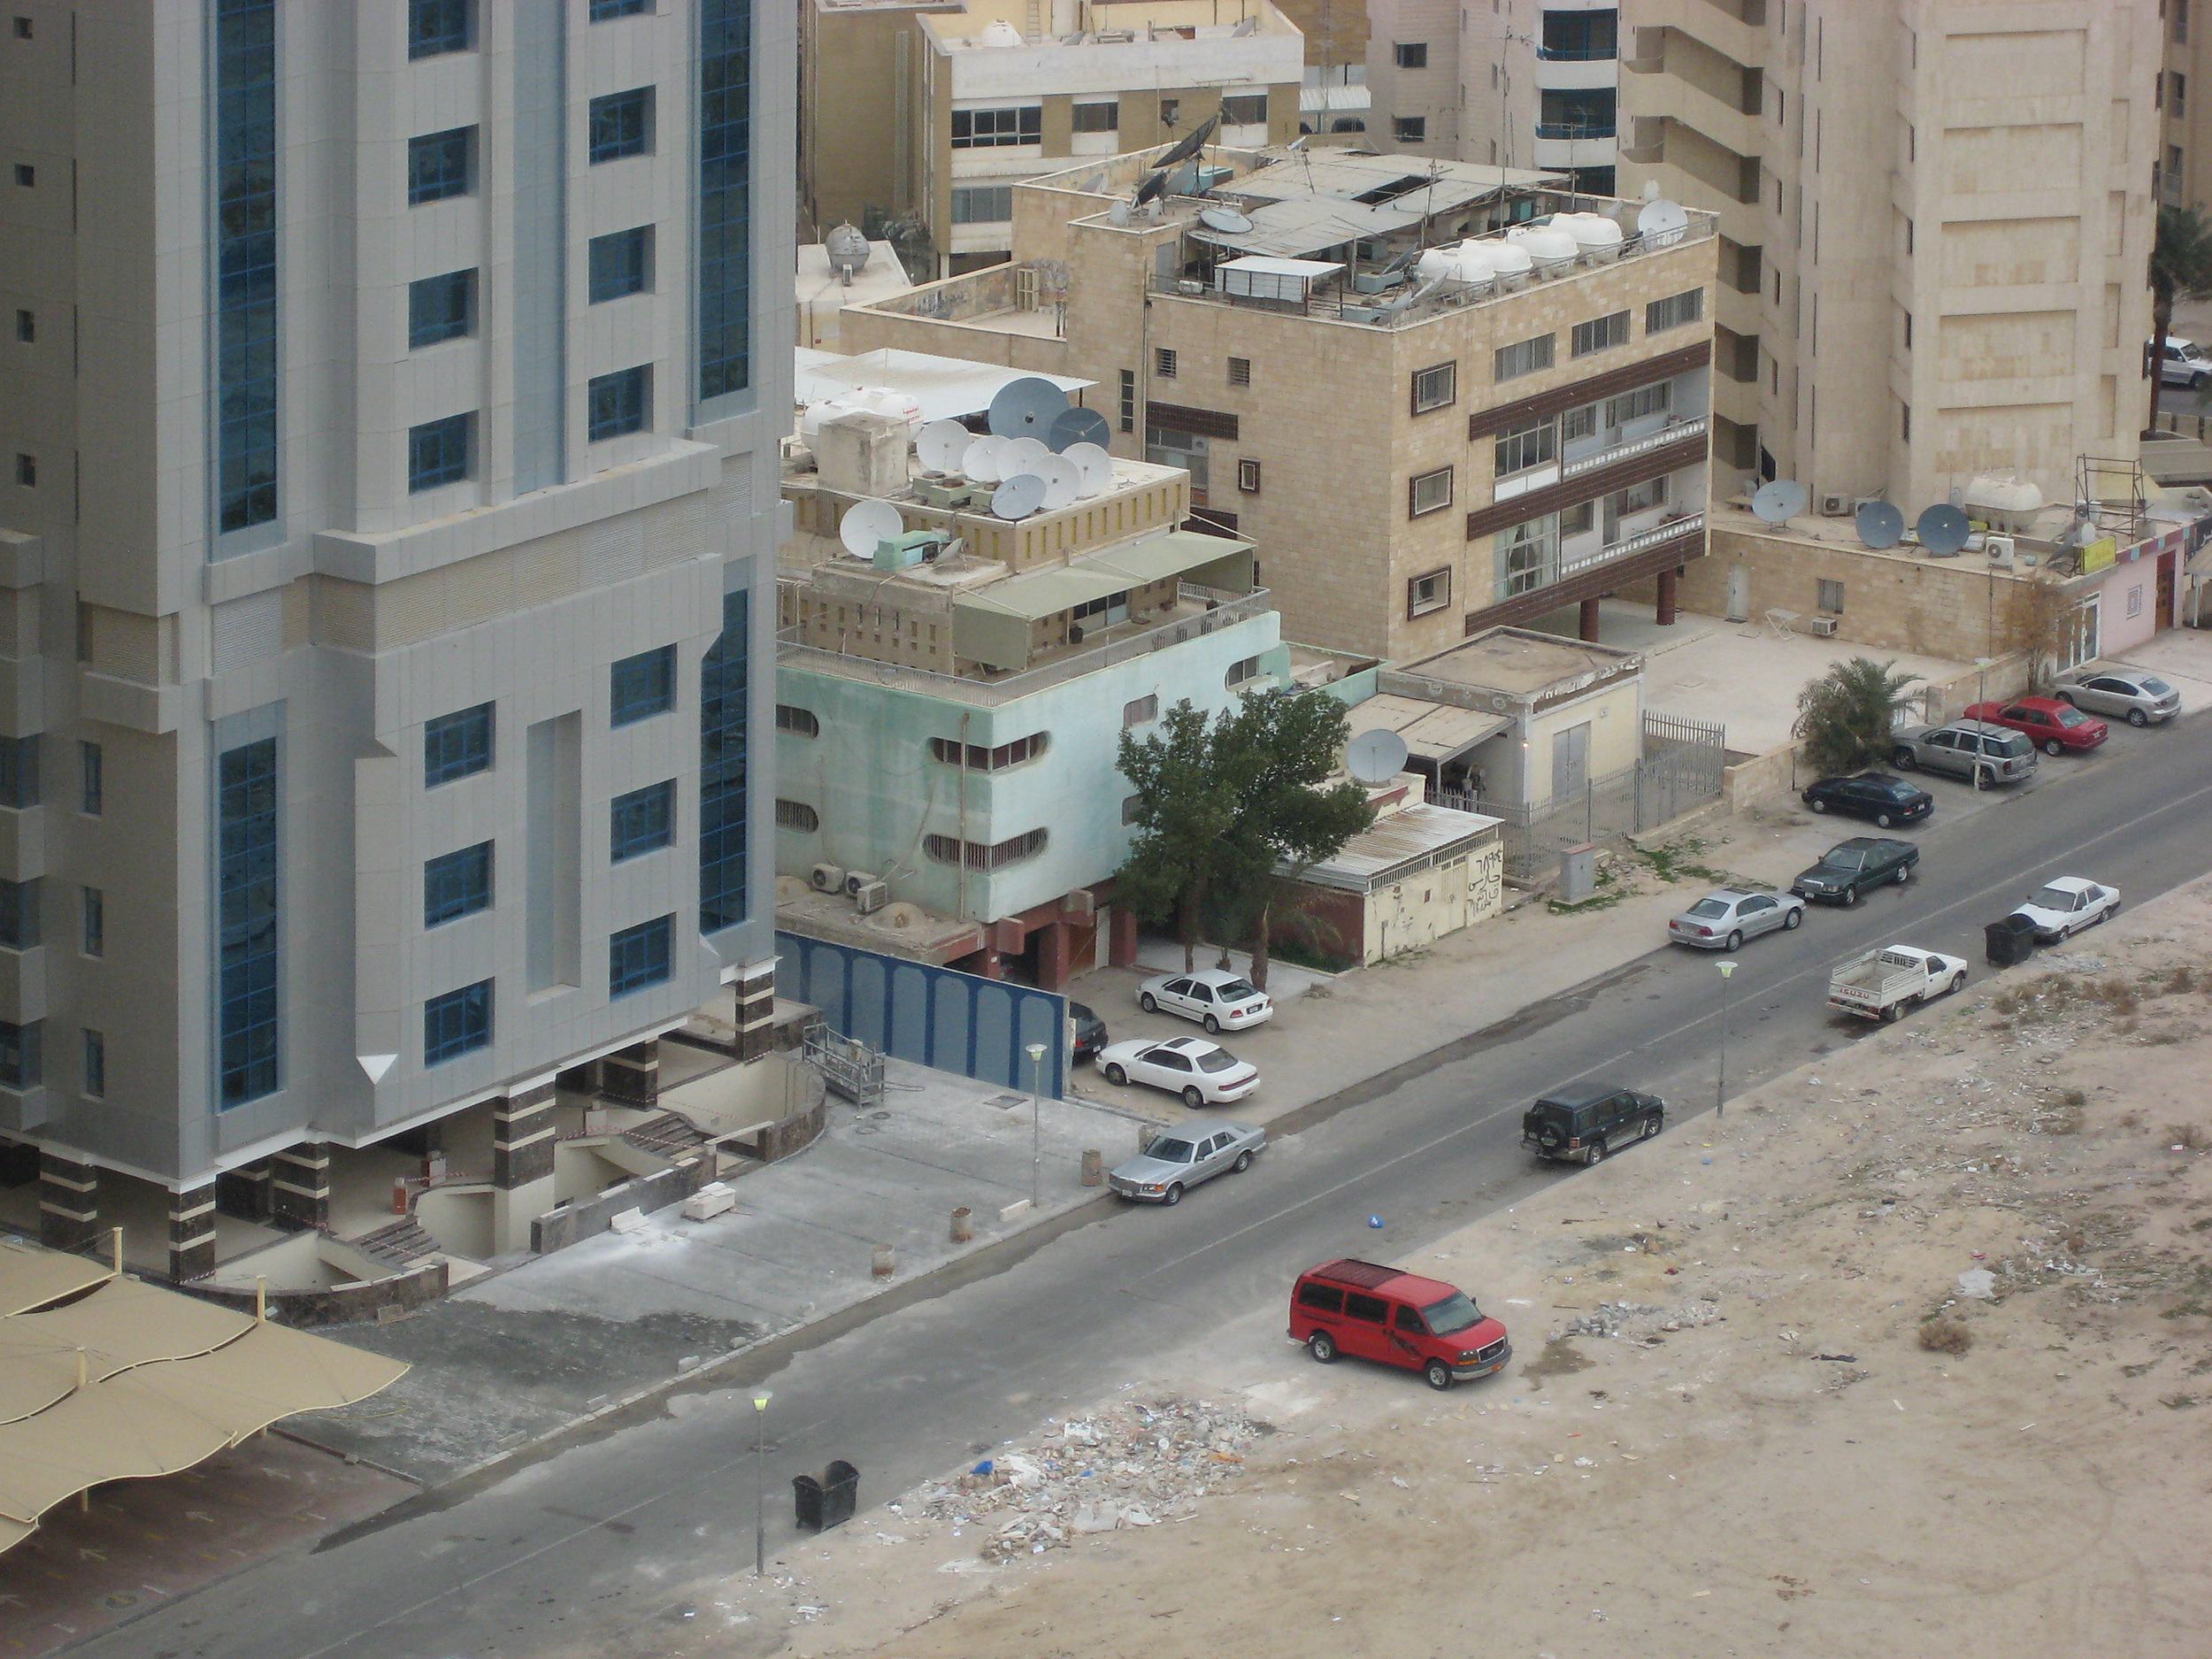  64th Street,  Kuwait City,  Kuwait 2008 